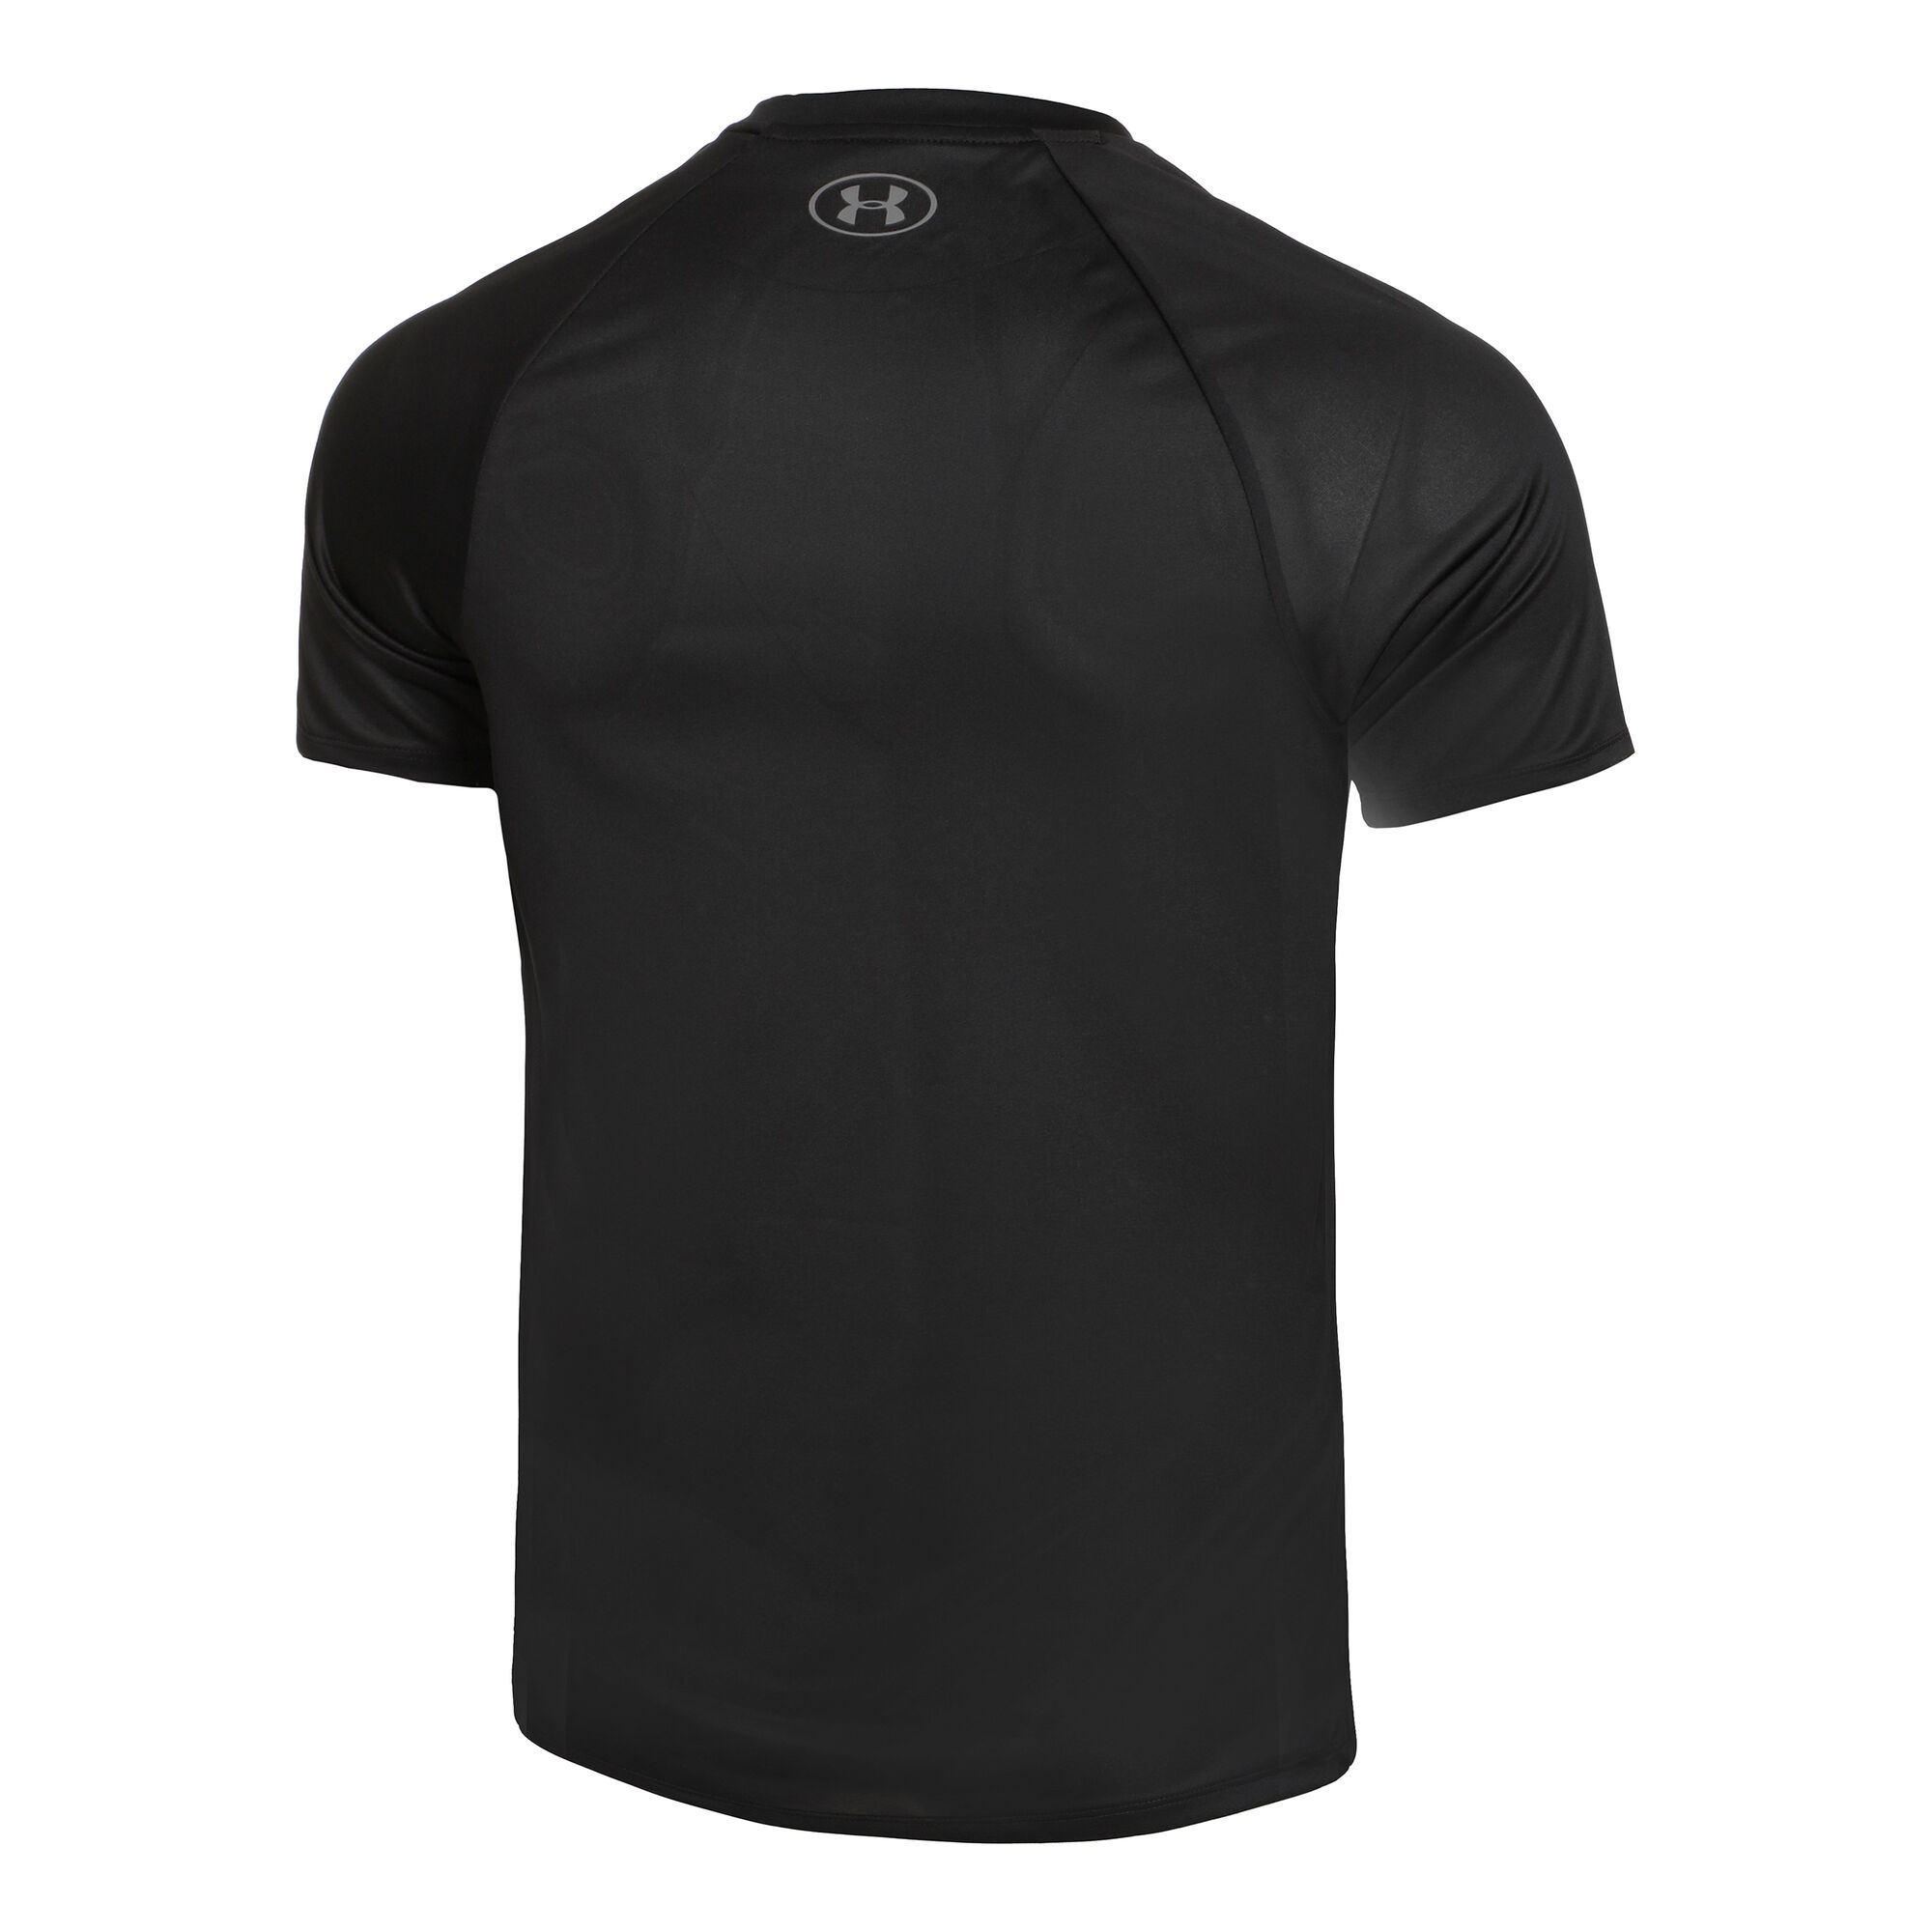 Buy Under Armour Tech 2.0 T-Shirt Men Black online